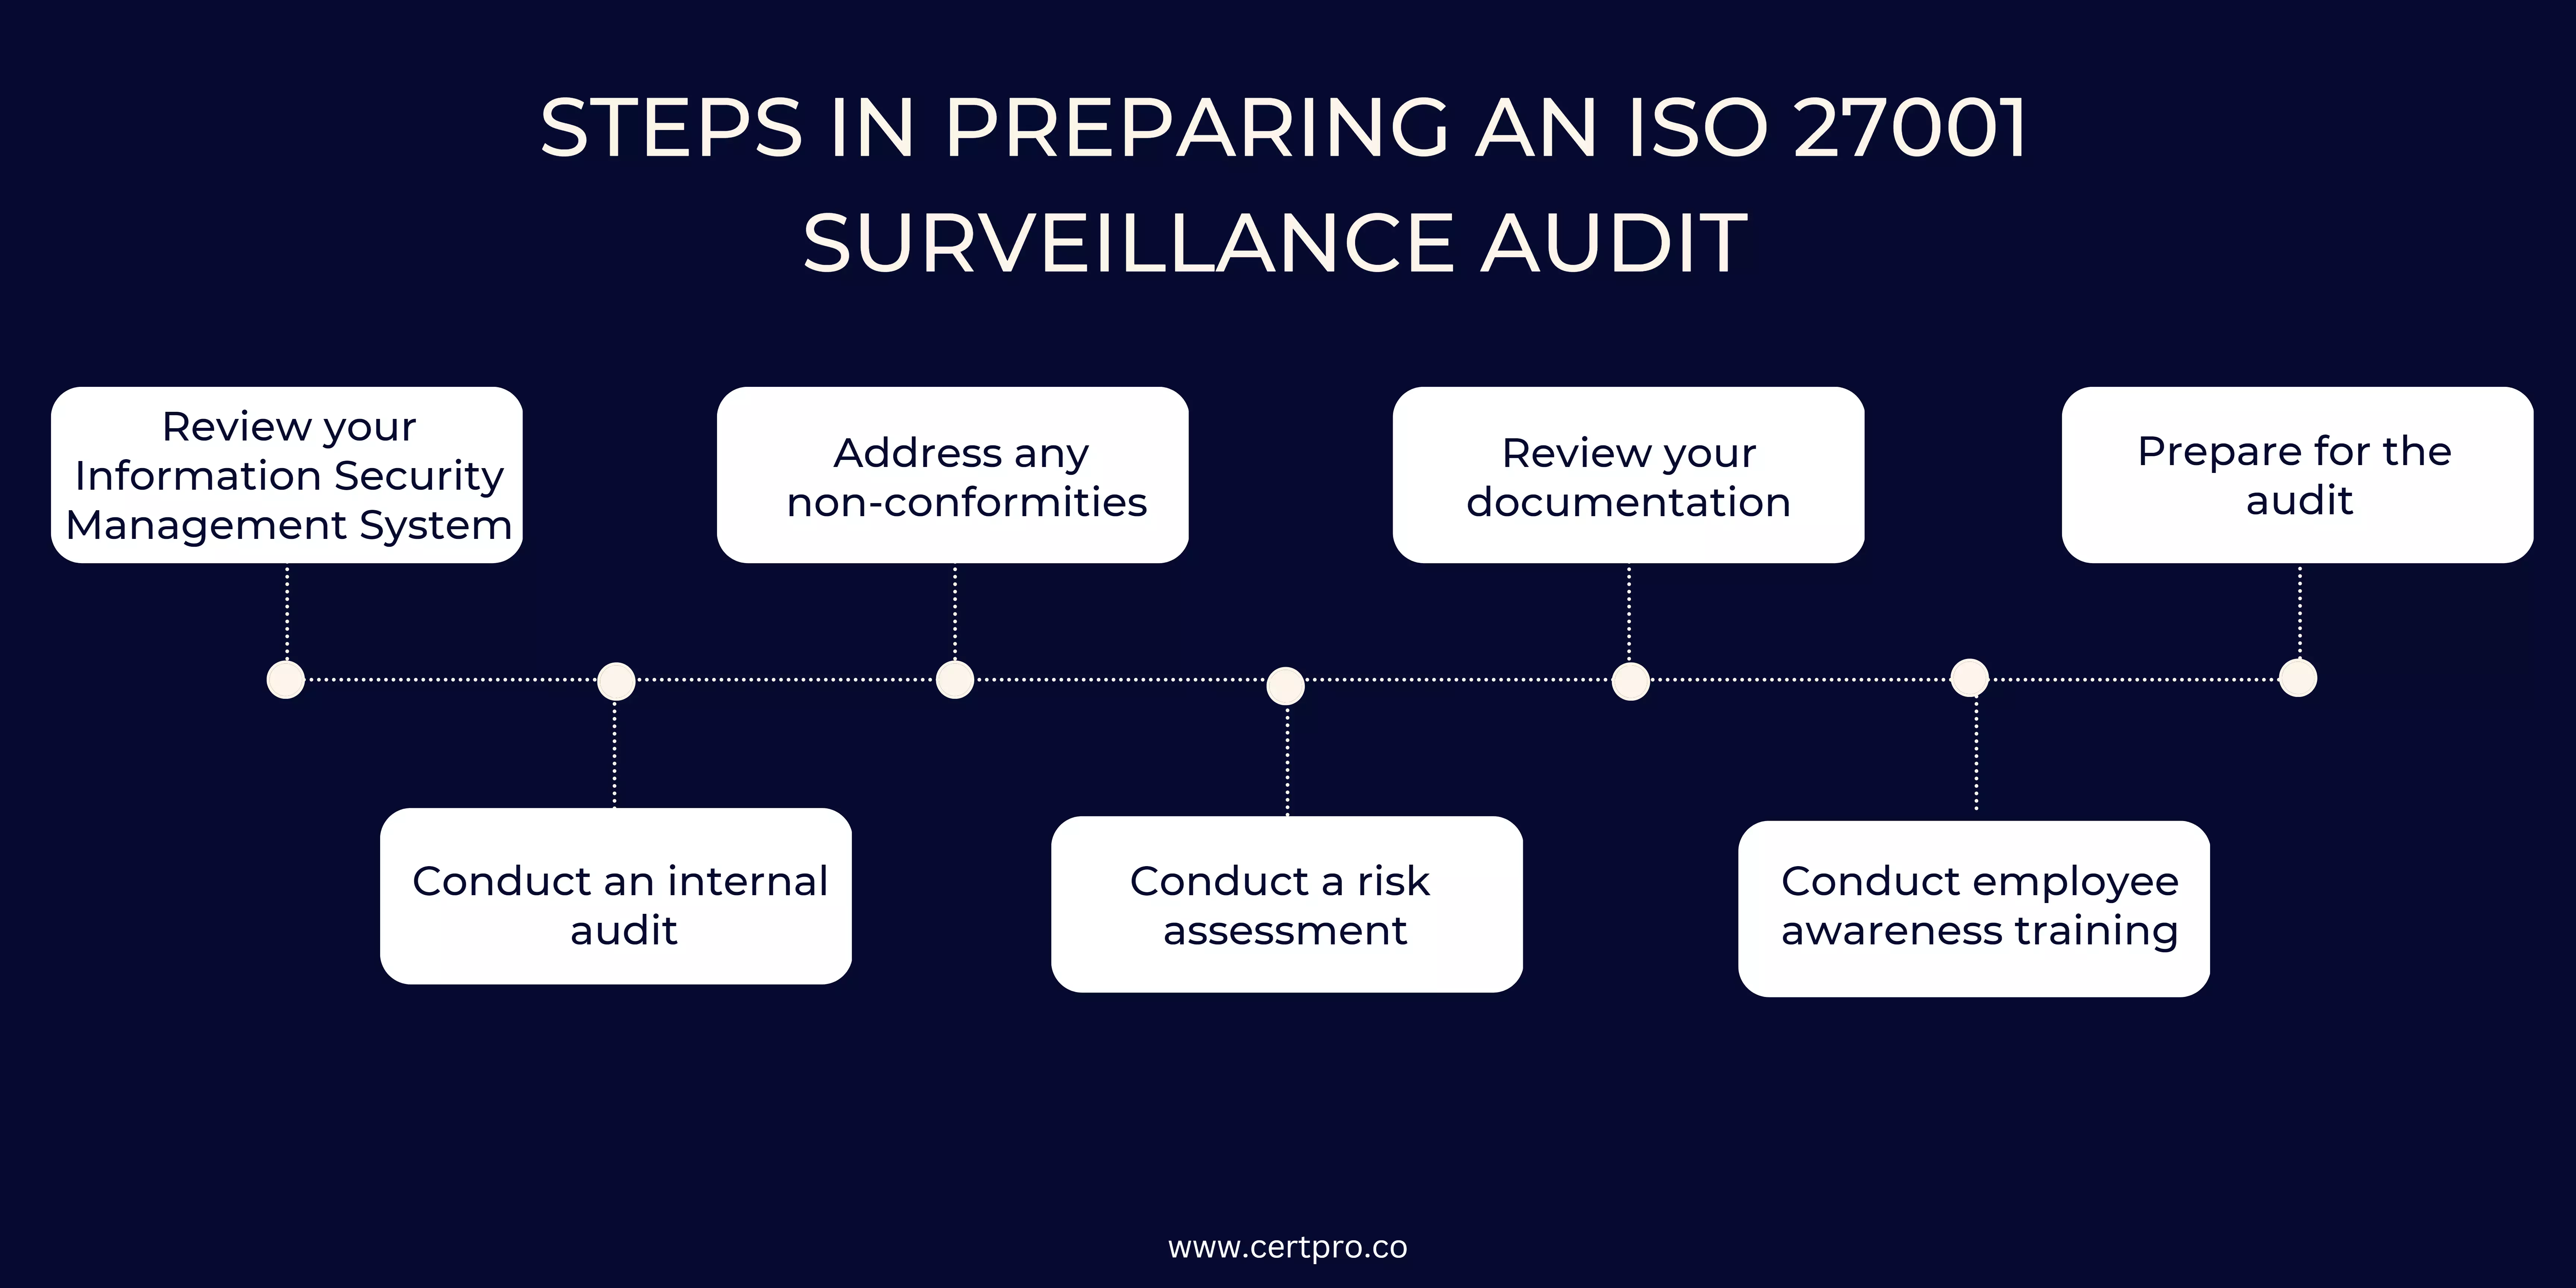 ISO 27001 Surveillance Audit Steps